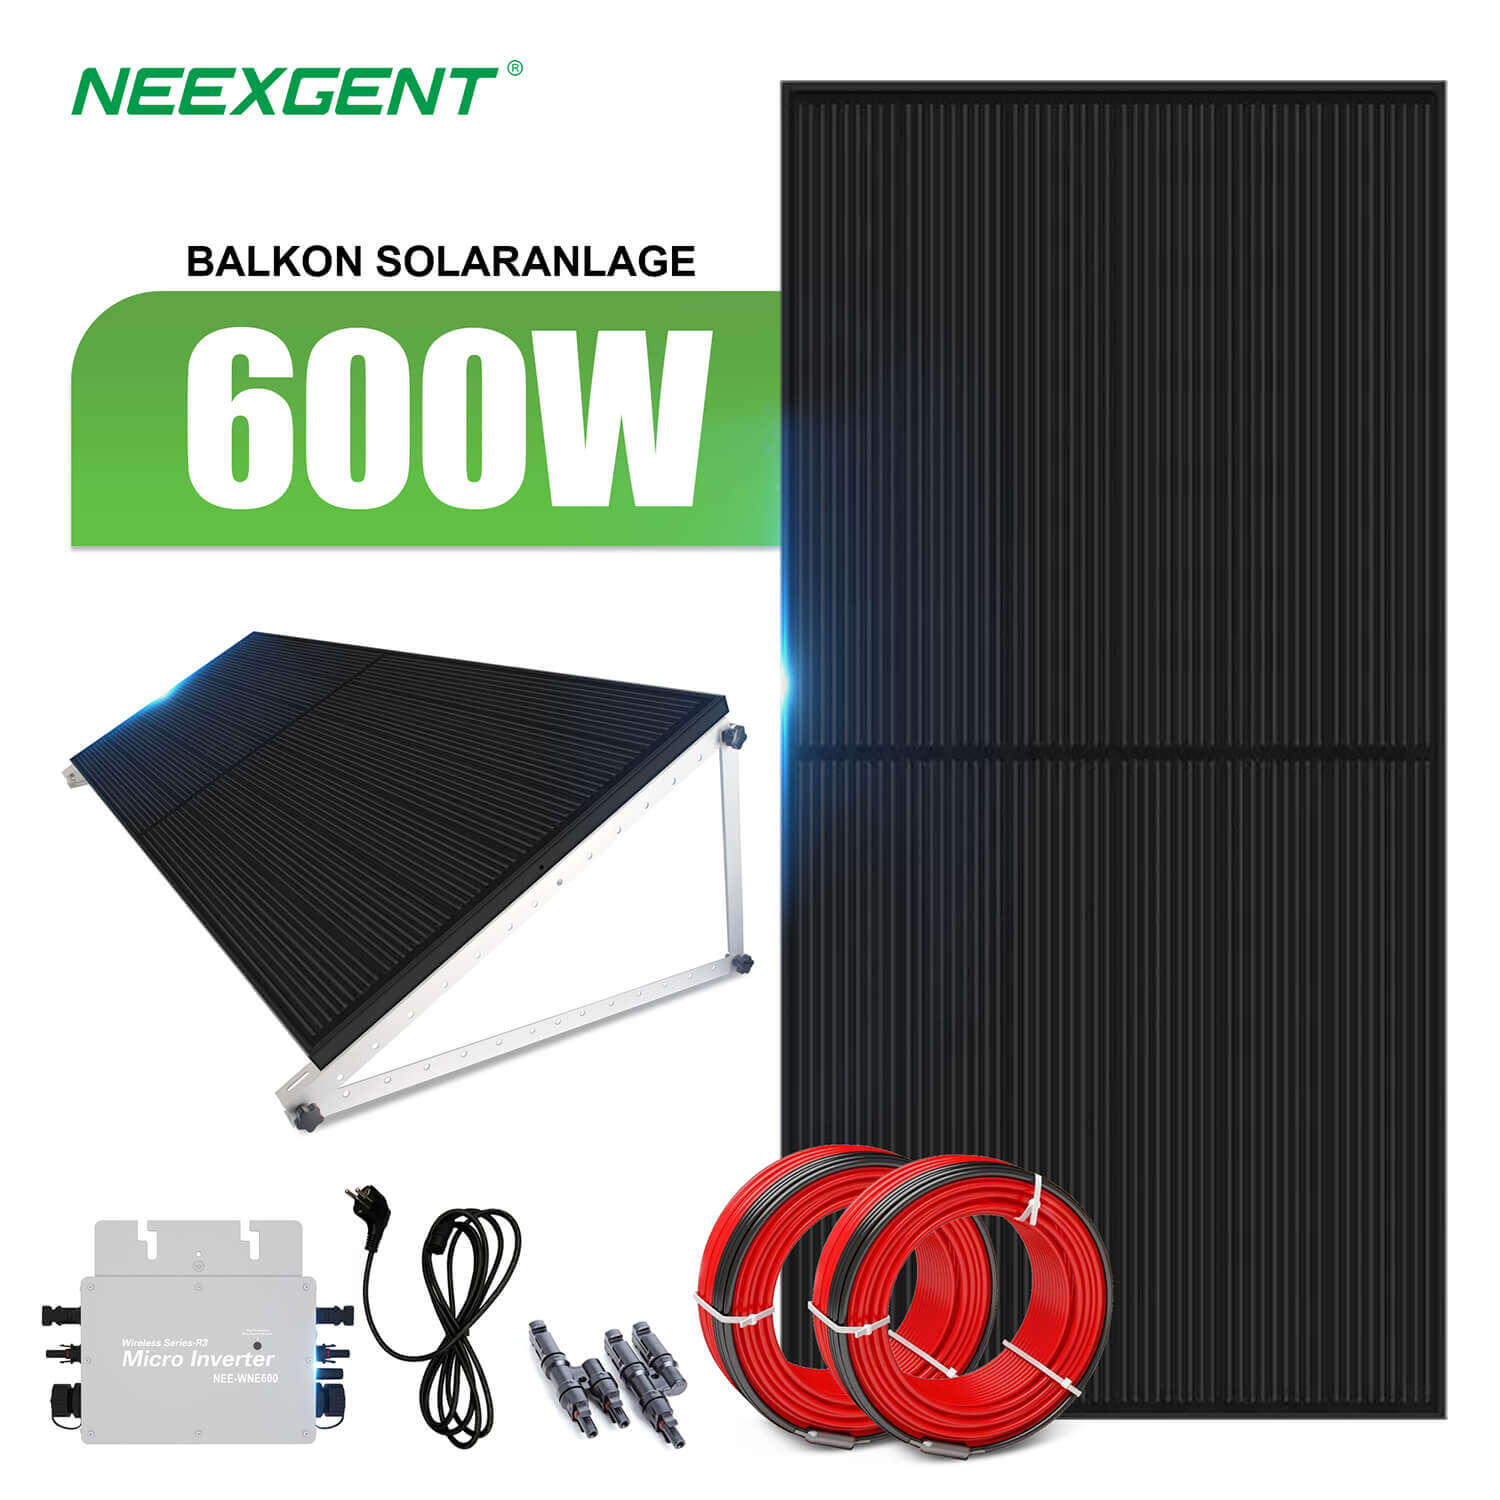 Neexgent 600w Balcony Power Solar System Pv Kits Micro Inverter mit flexiblen Solarmodulen